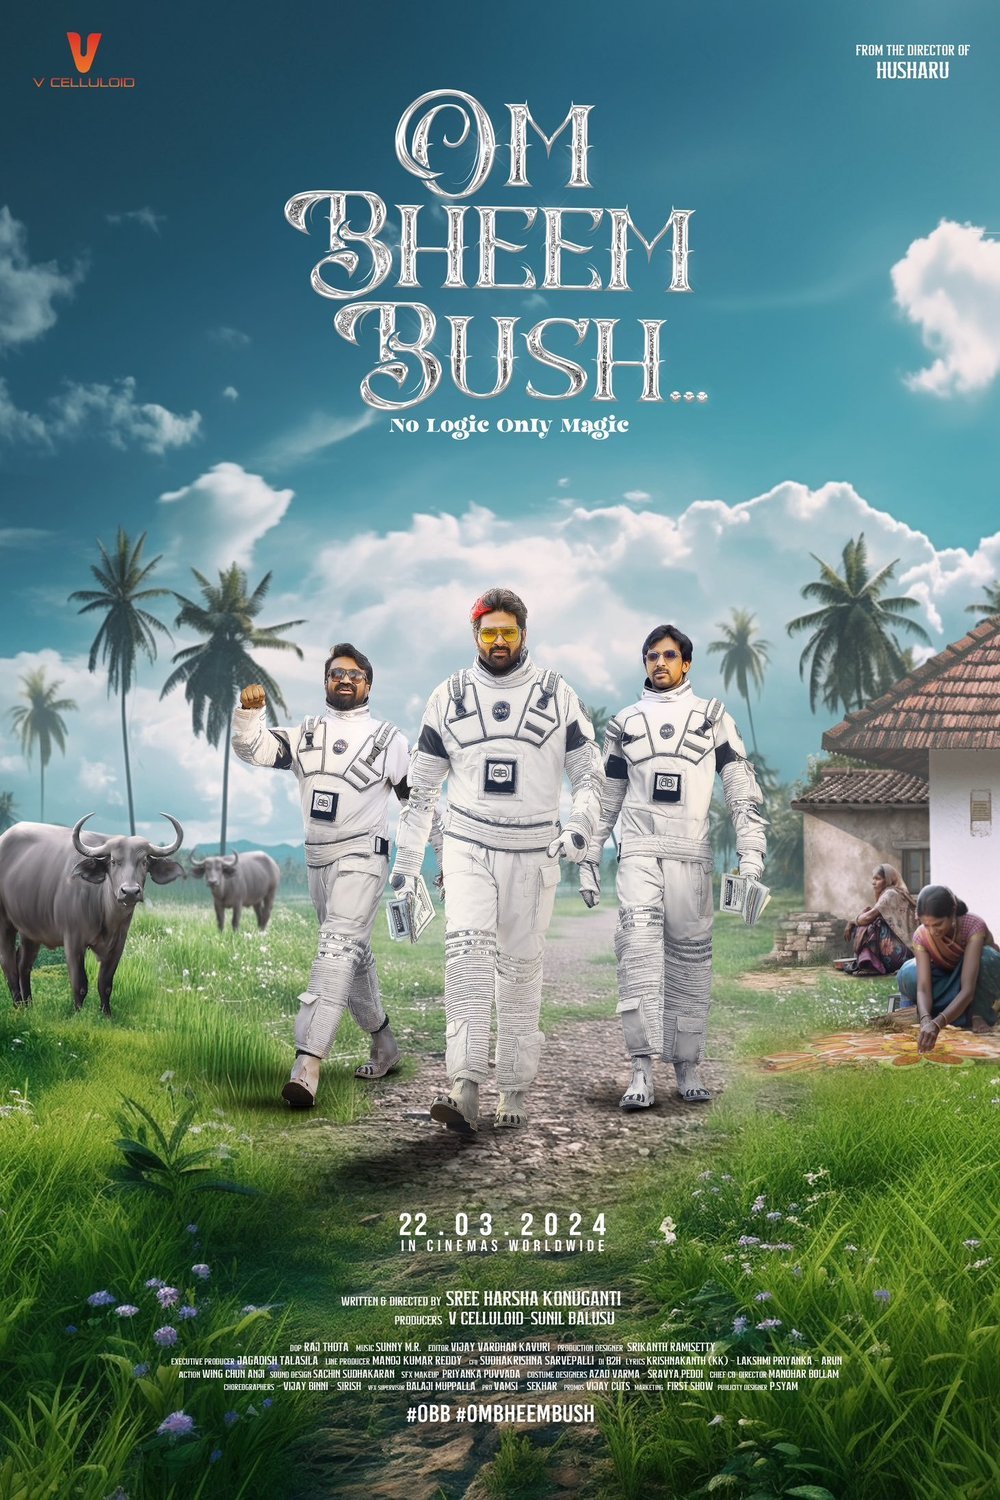 L'affiche originale du film Om Bheem Bush en Telugu